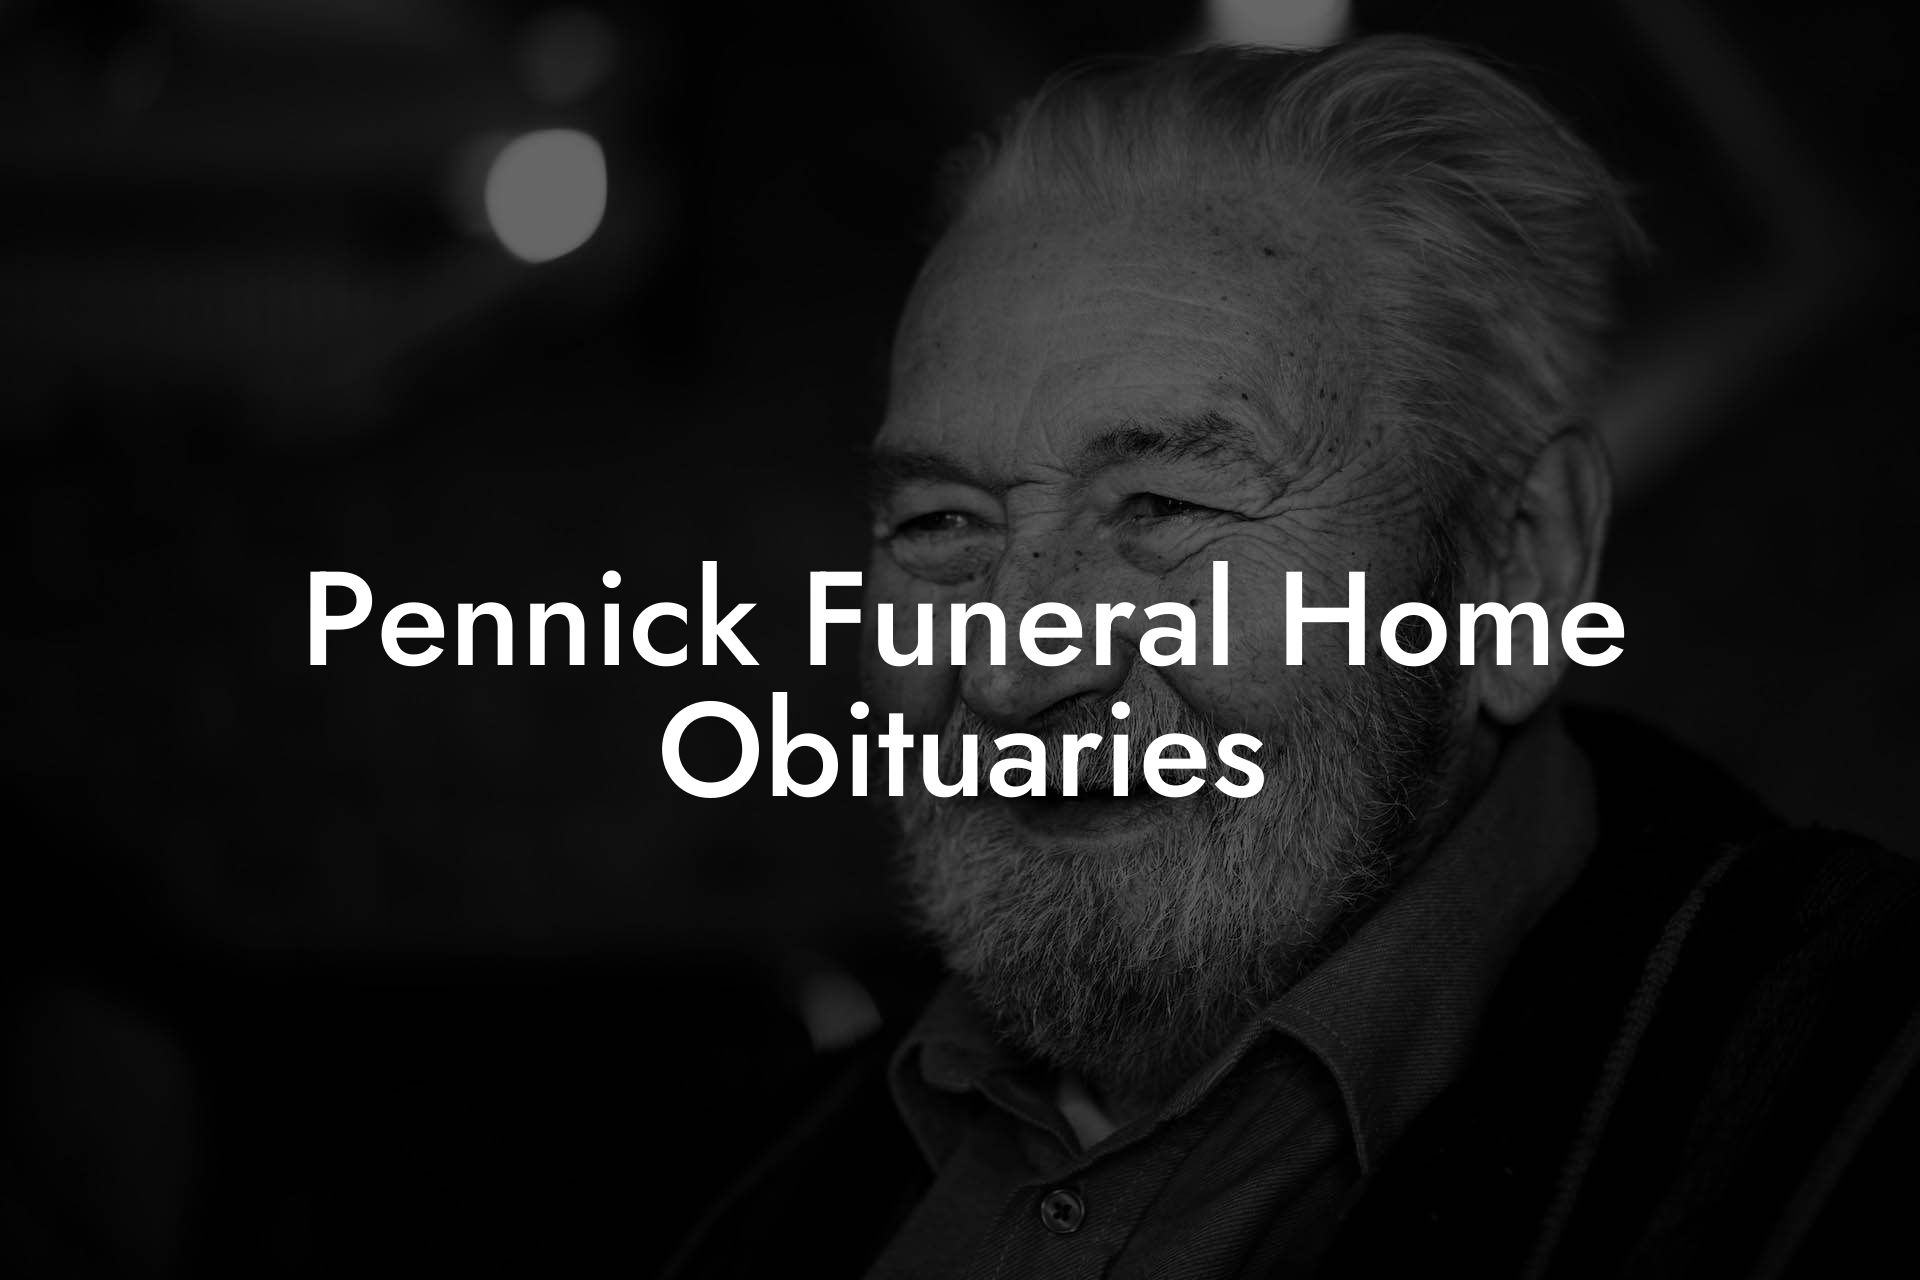 Pennick Funeral Home Obituaries